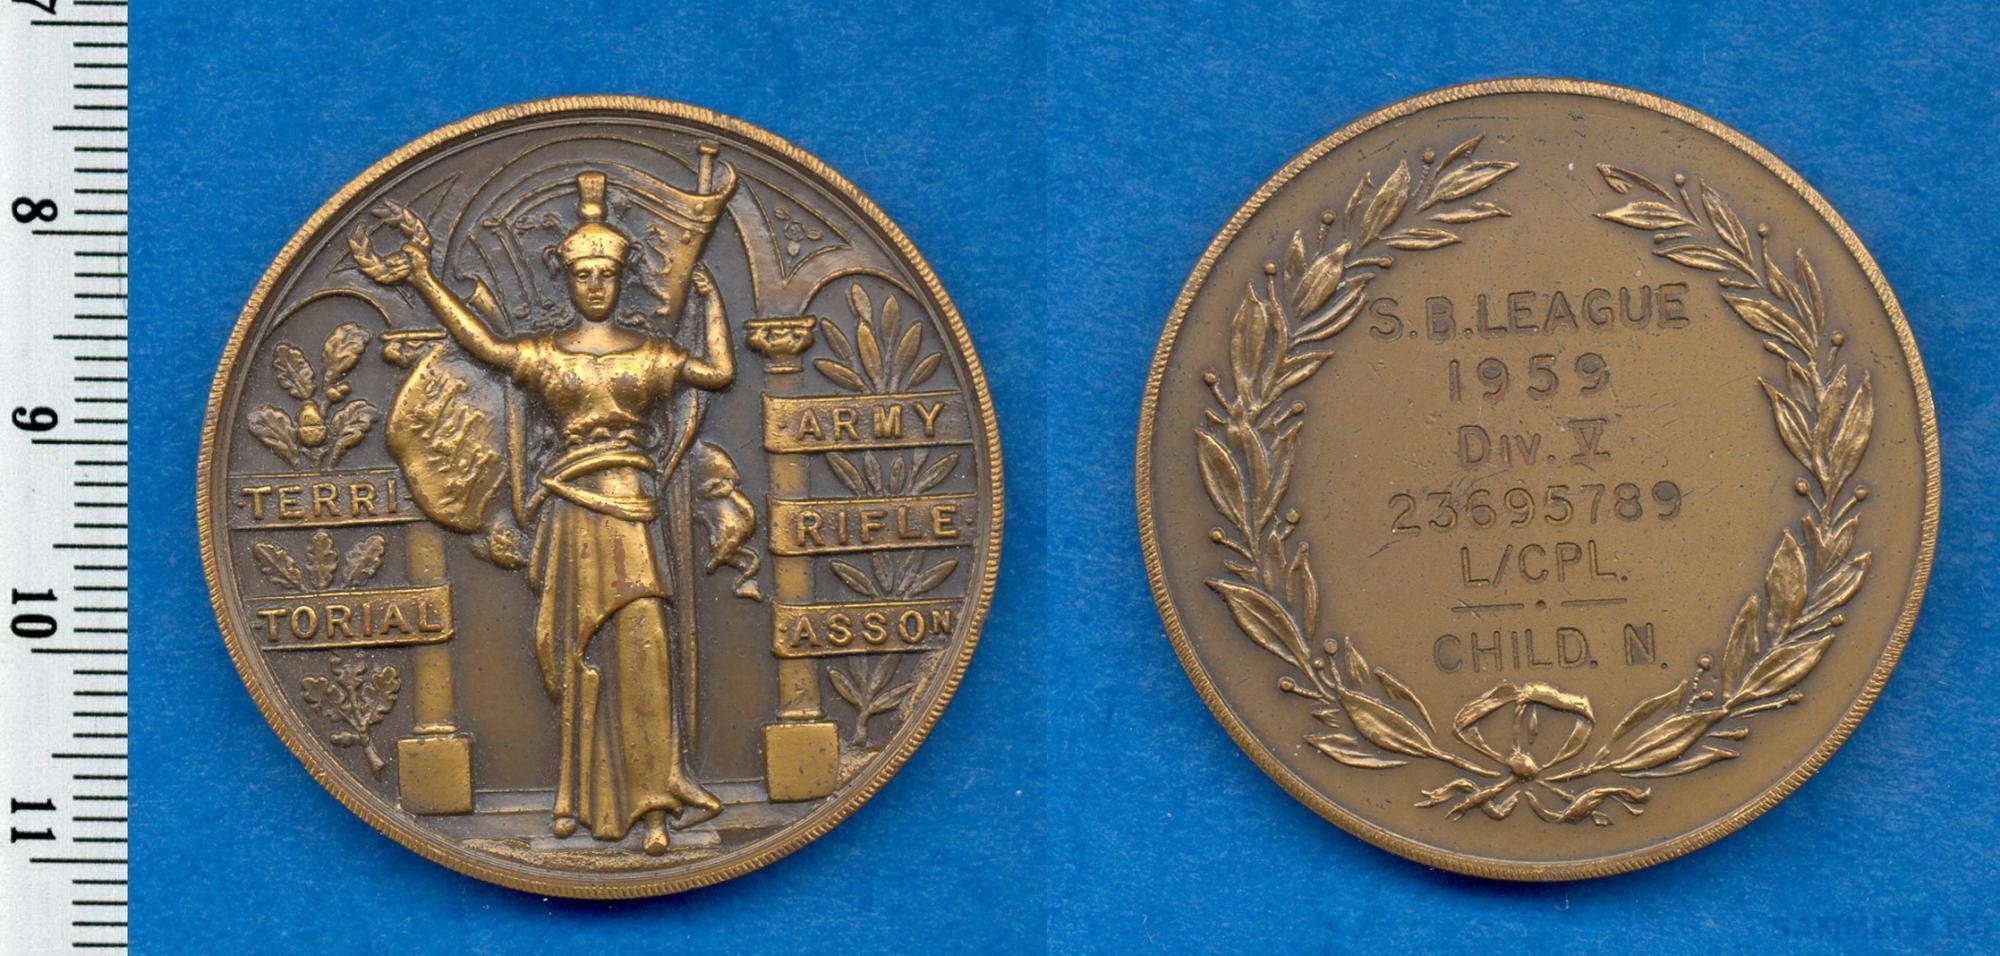 TA Rifl Association Medal to 23695789 L-Cpl N.CHILD  (1959).jpg